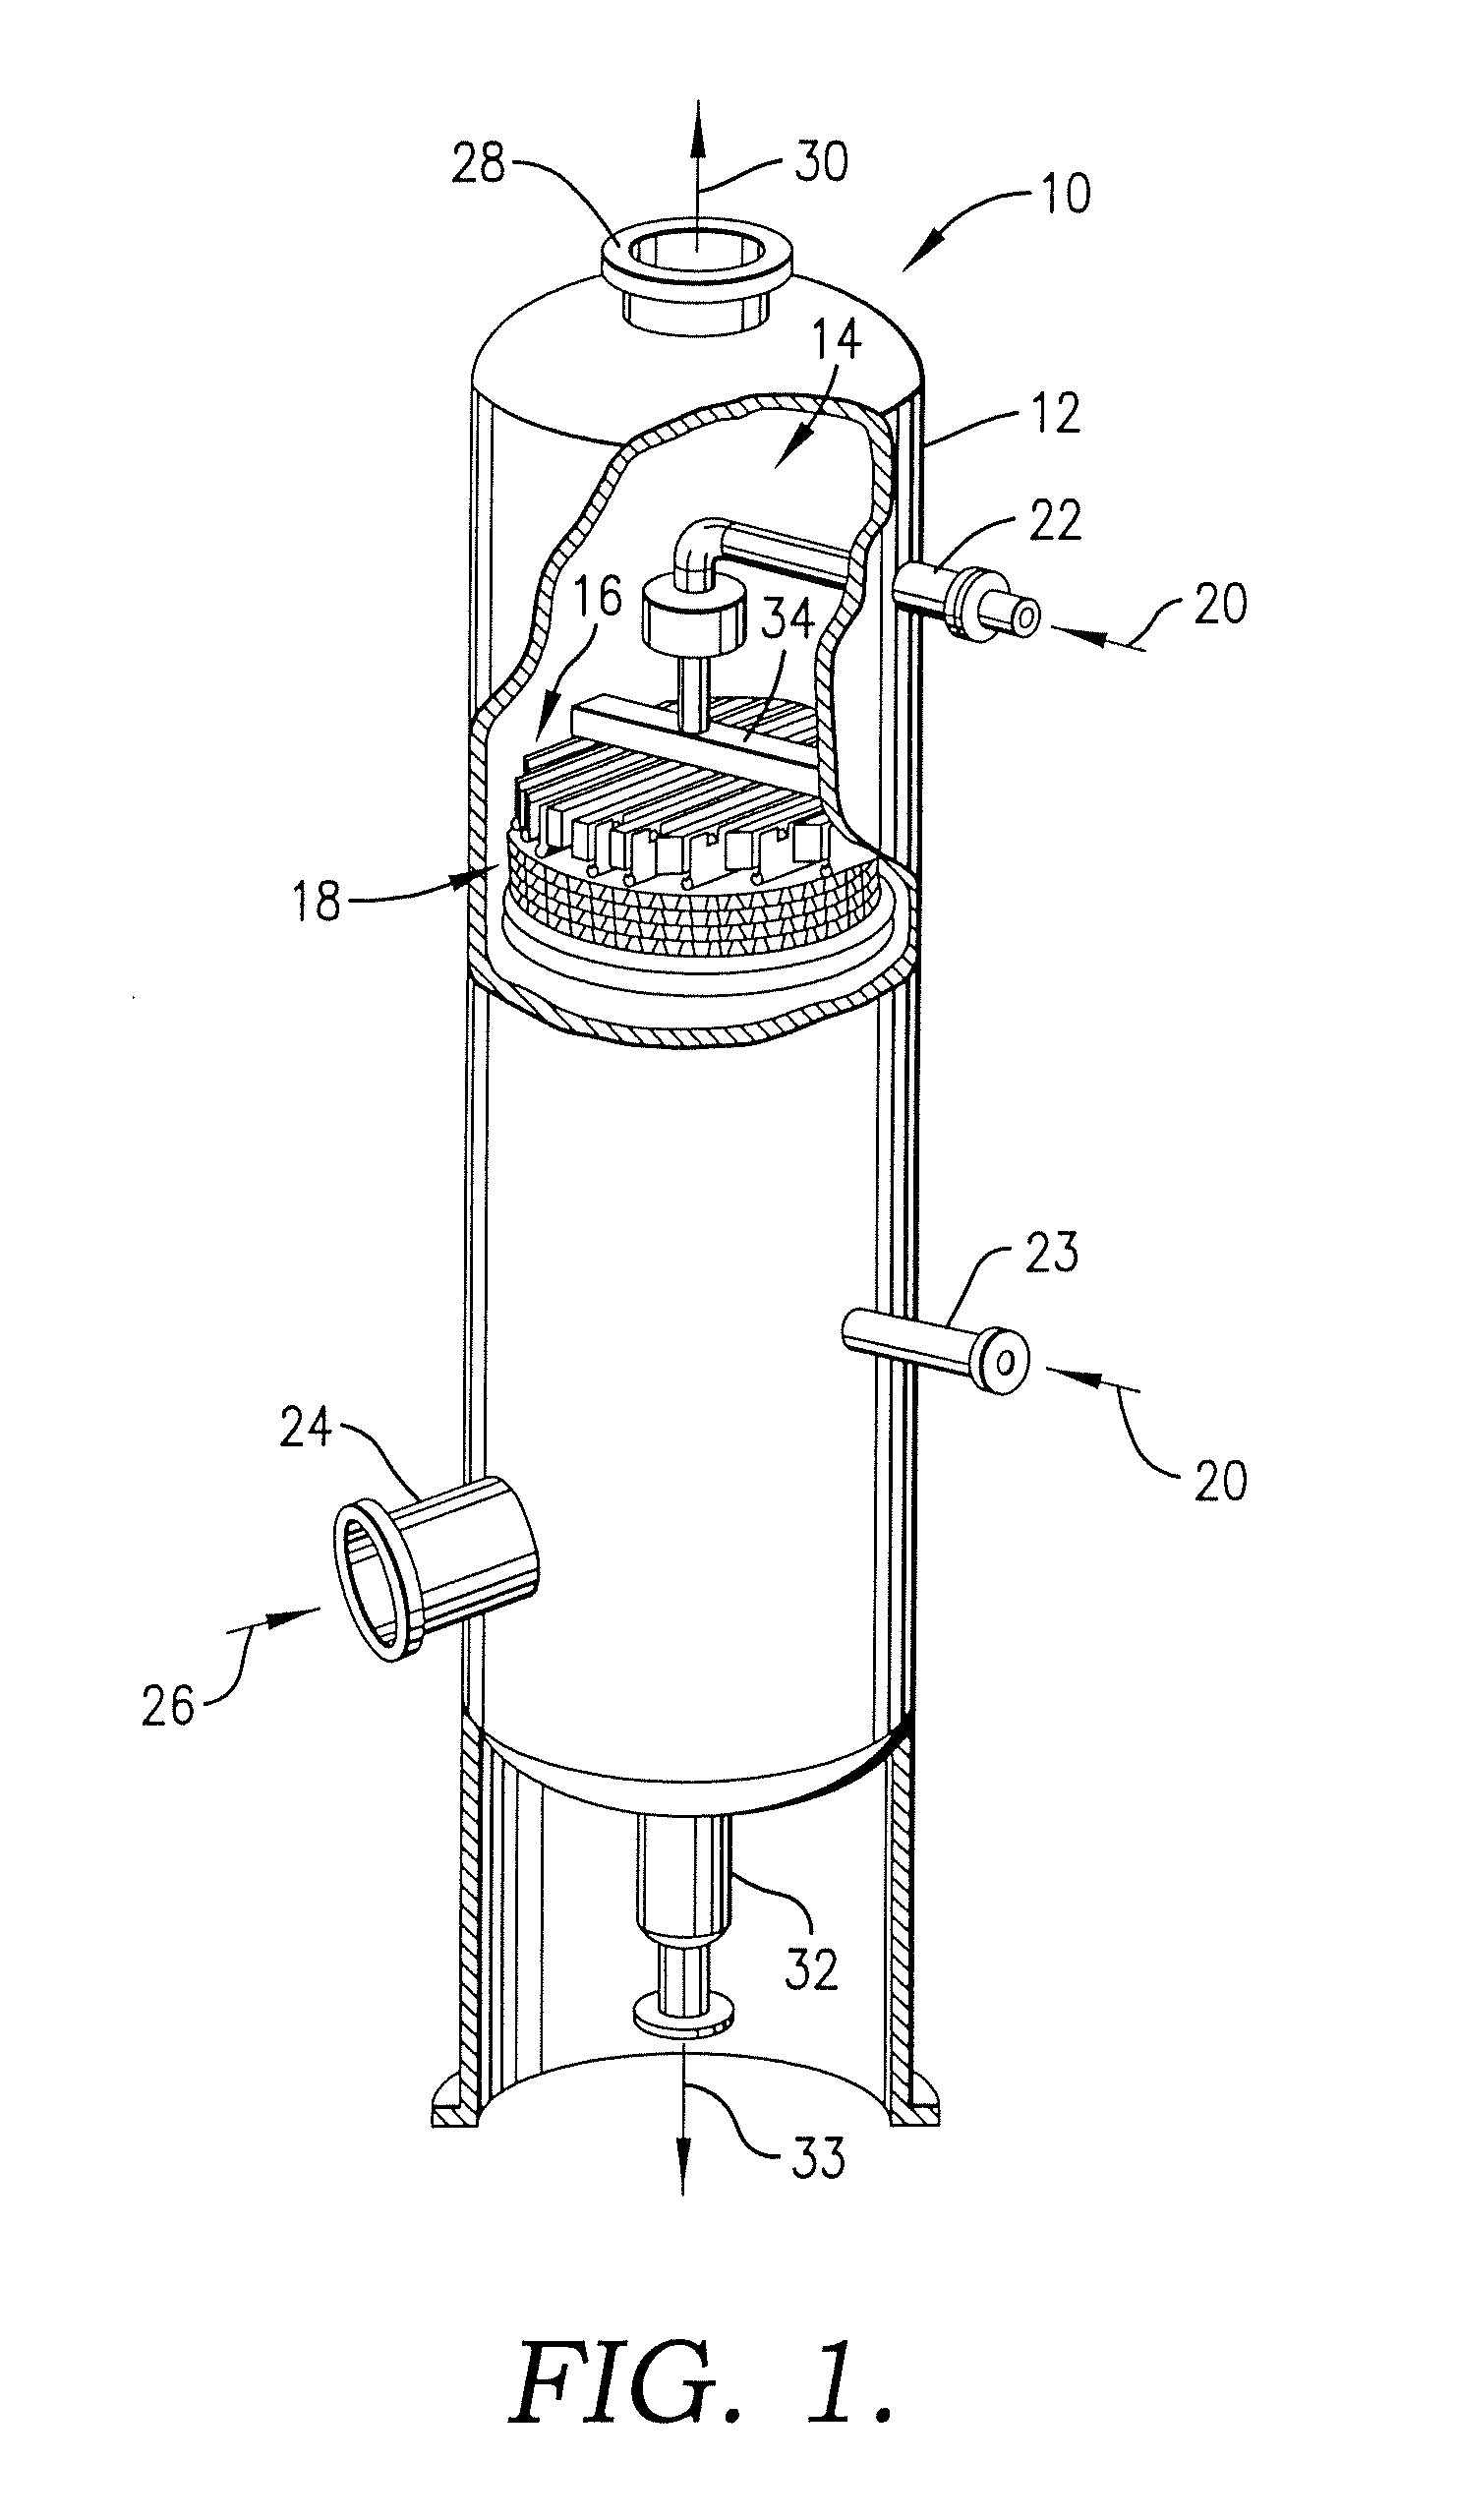 Liquid distributor for use in mass transfer column